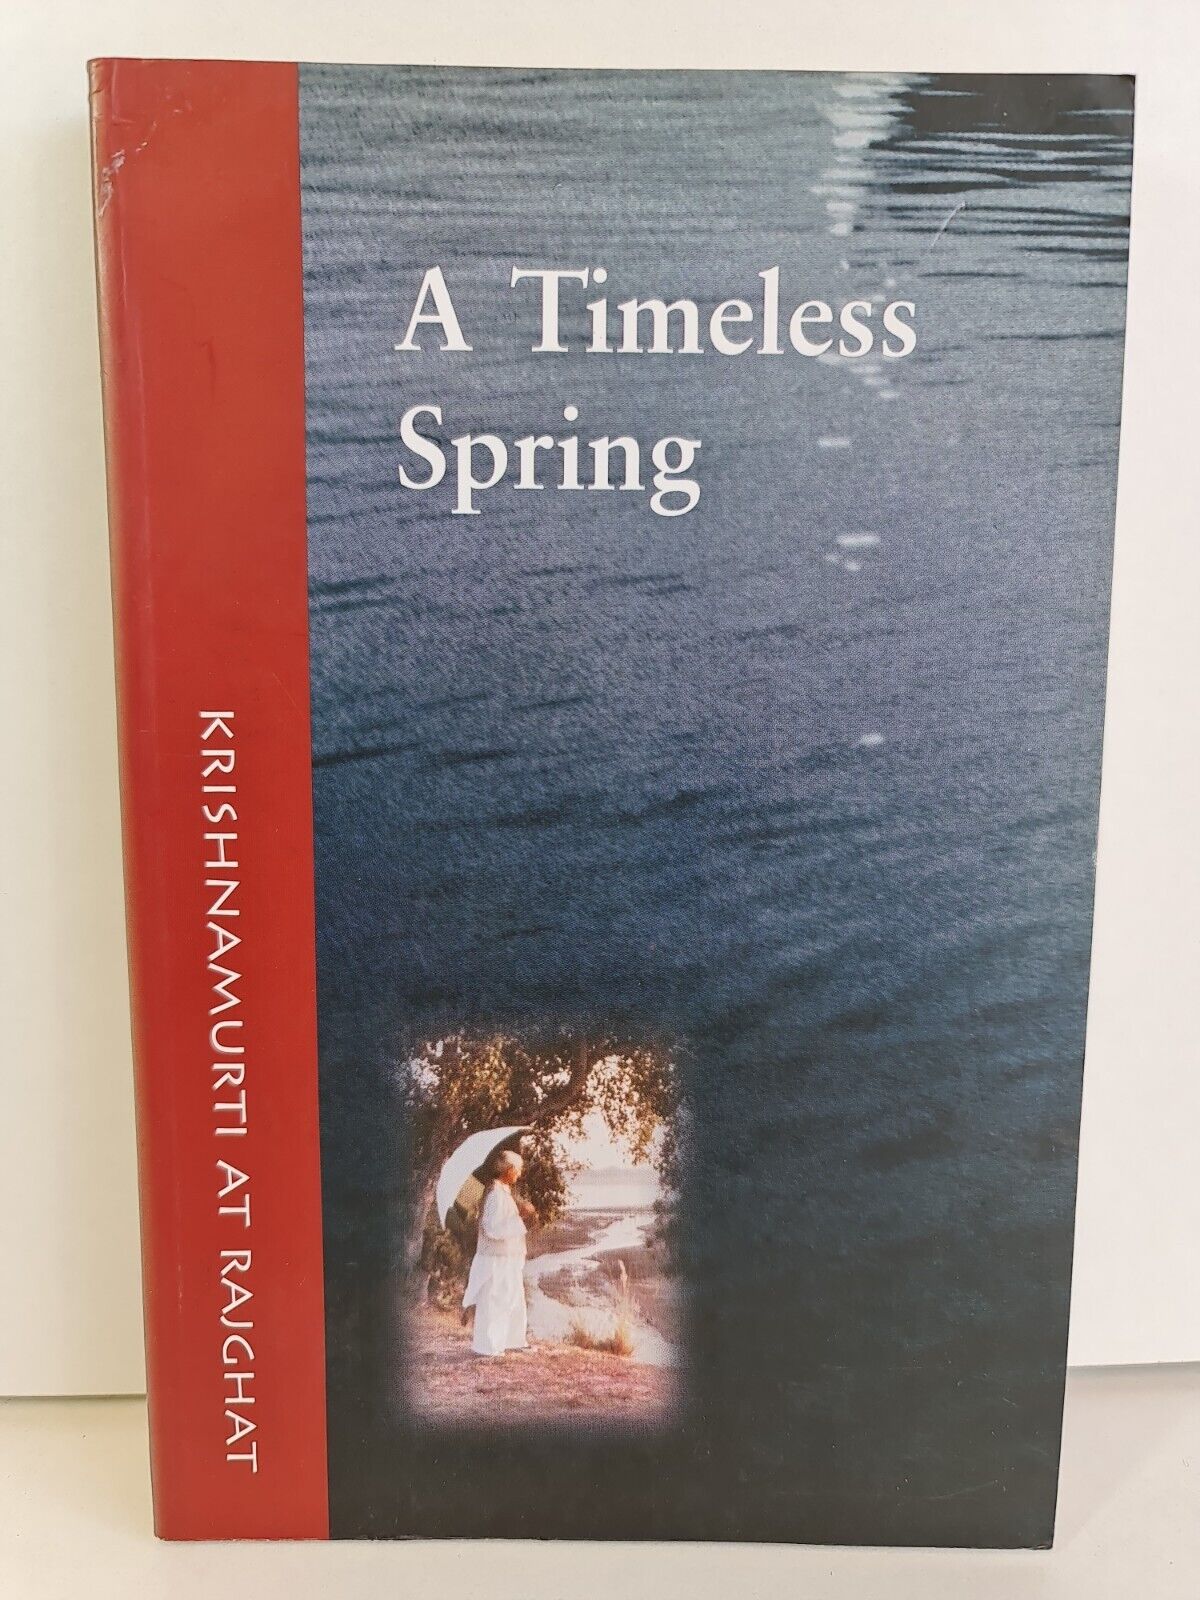 A Timeless Spring by J. Krishnamurti (1999)